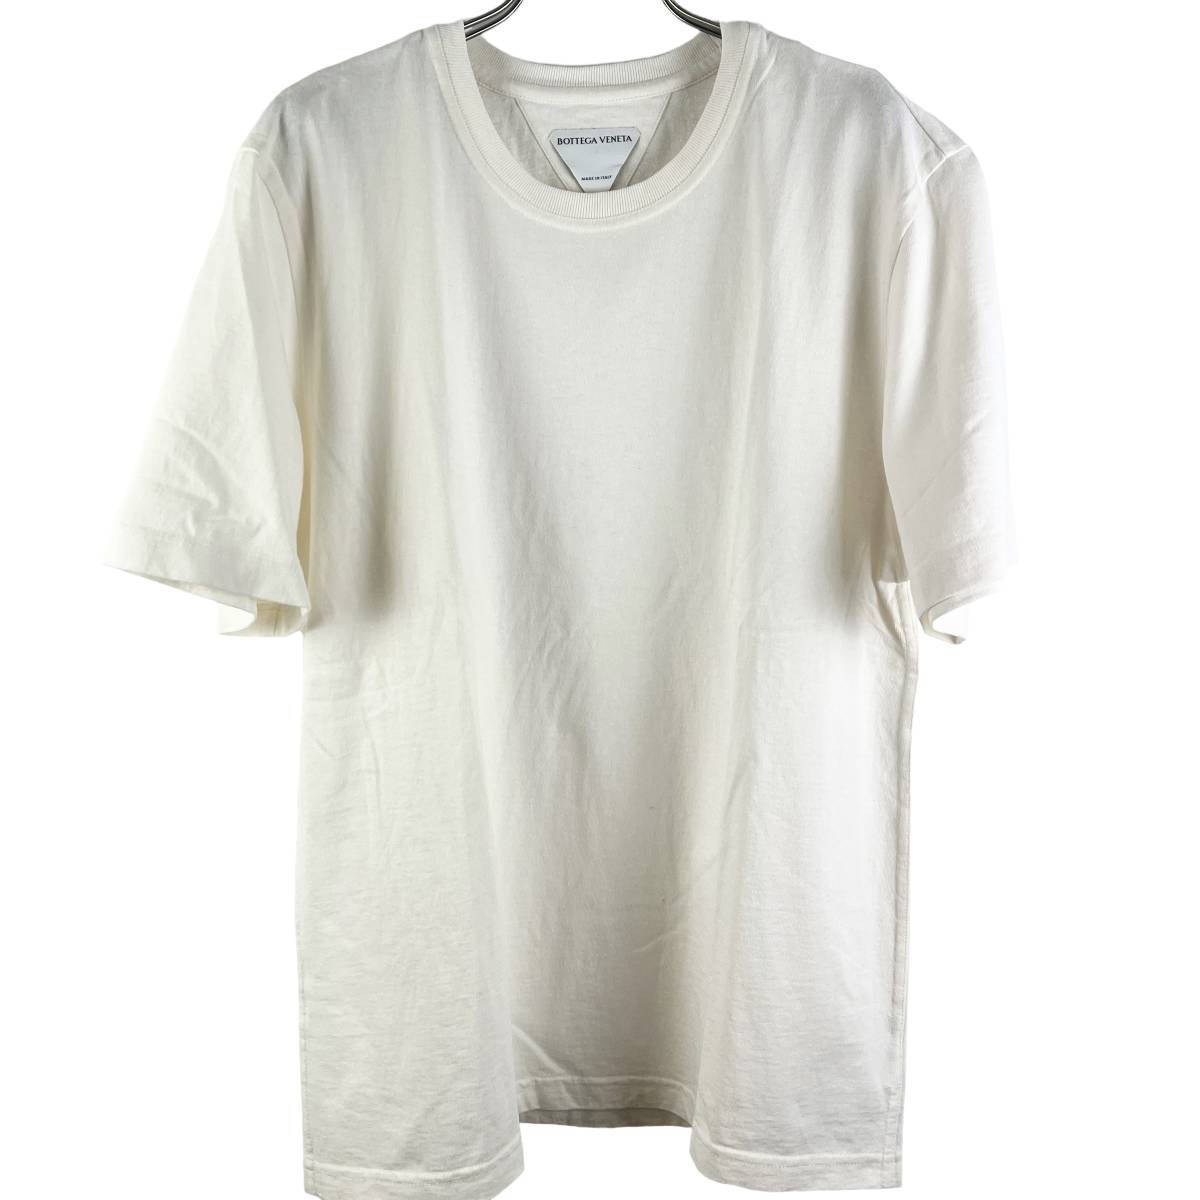 Bottega Veneta(ボッテガ ヴェネタ) Cotton Shortsleeve T Shirt (white) 2